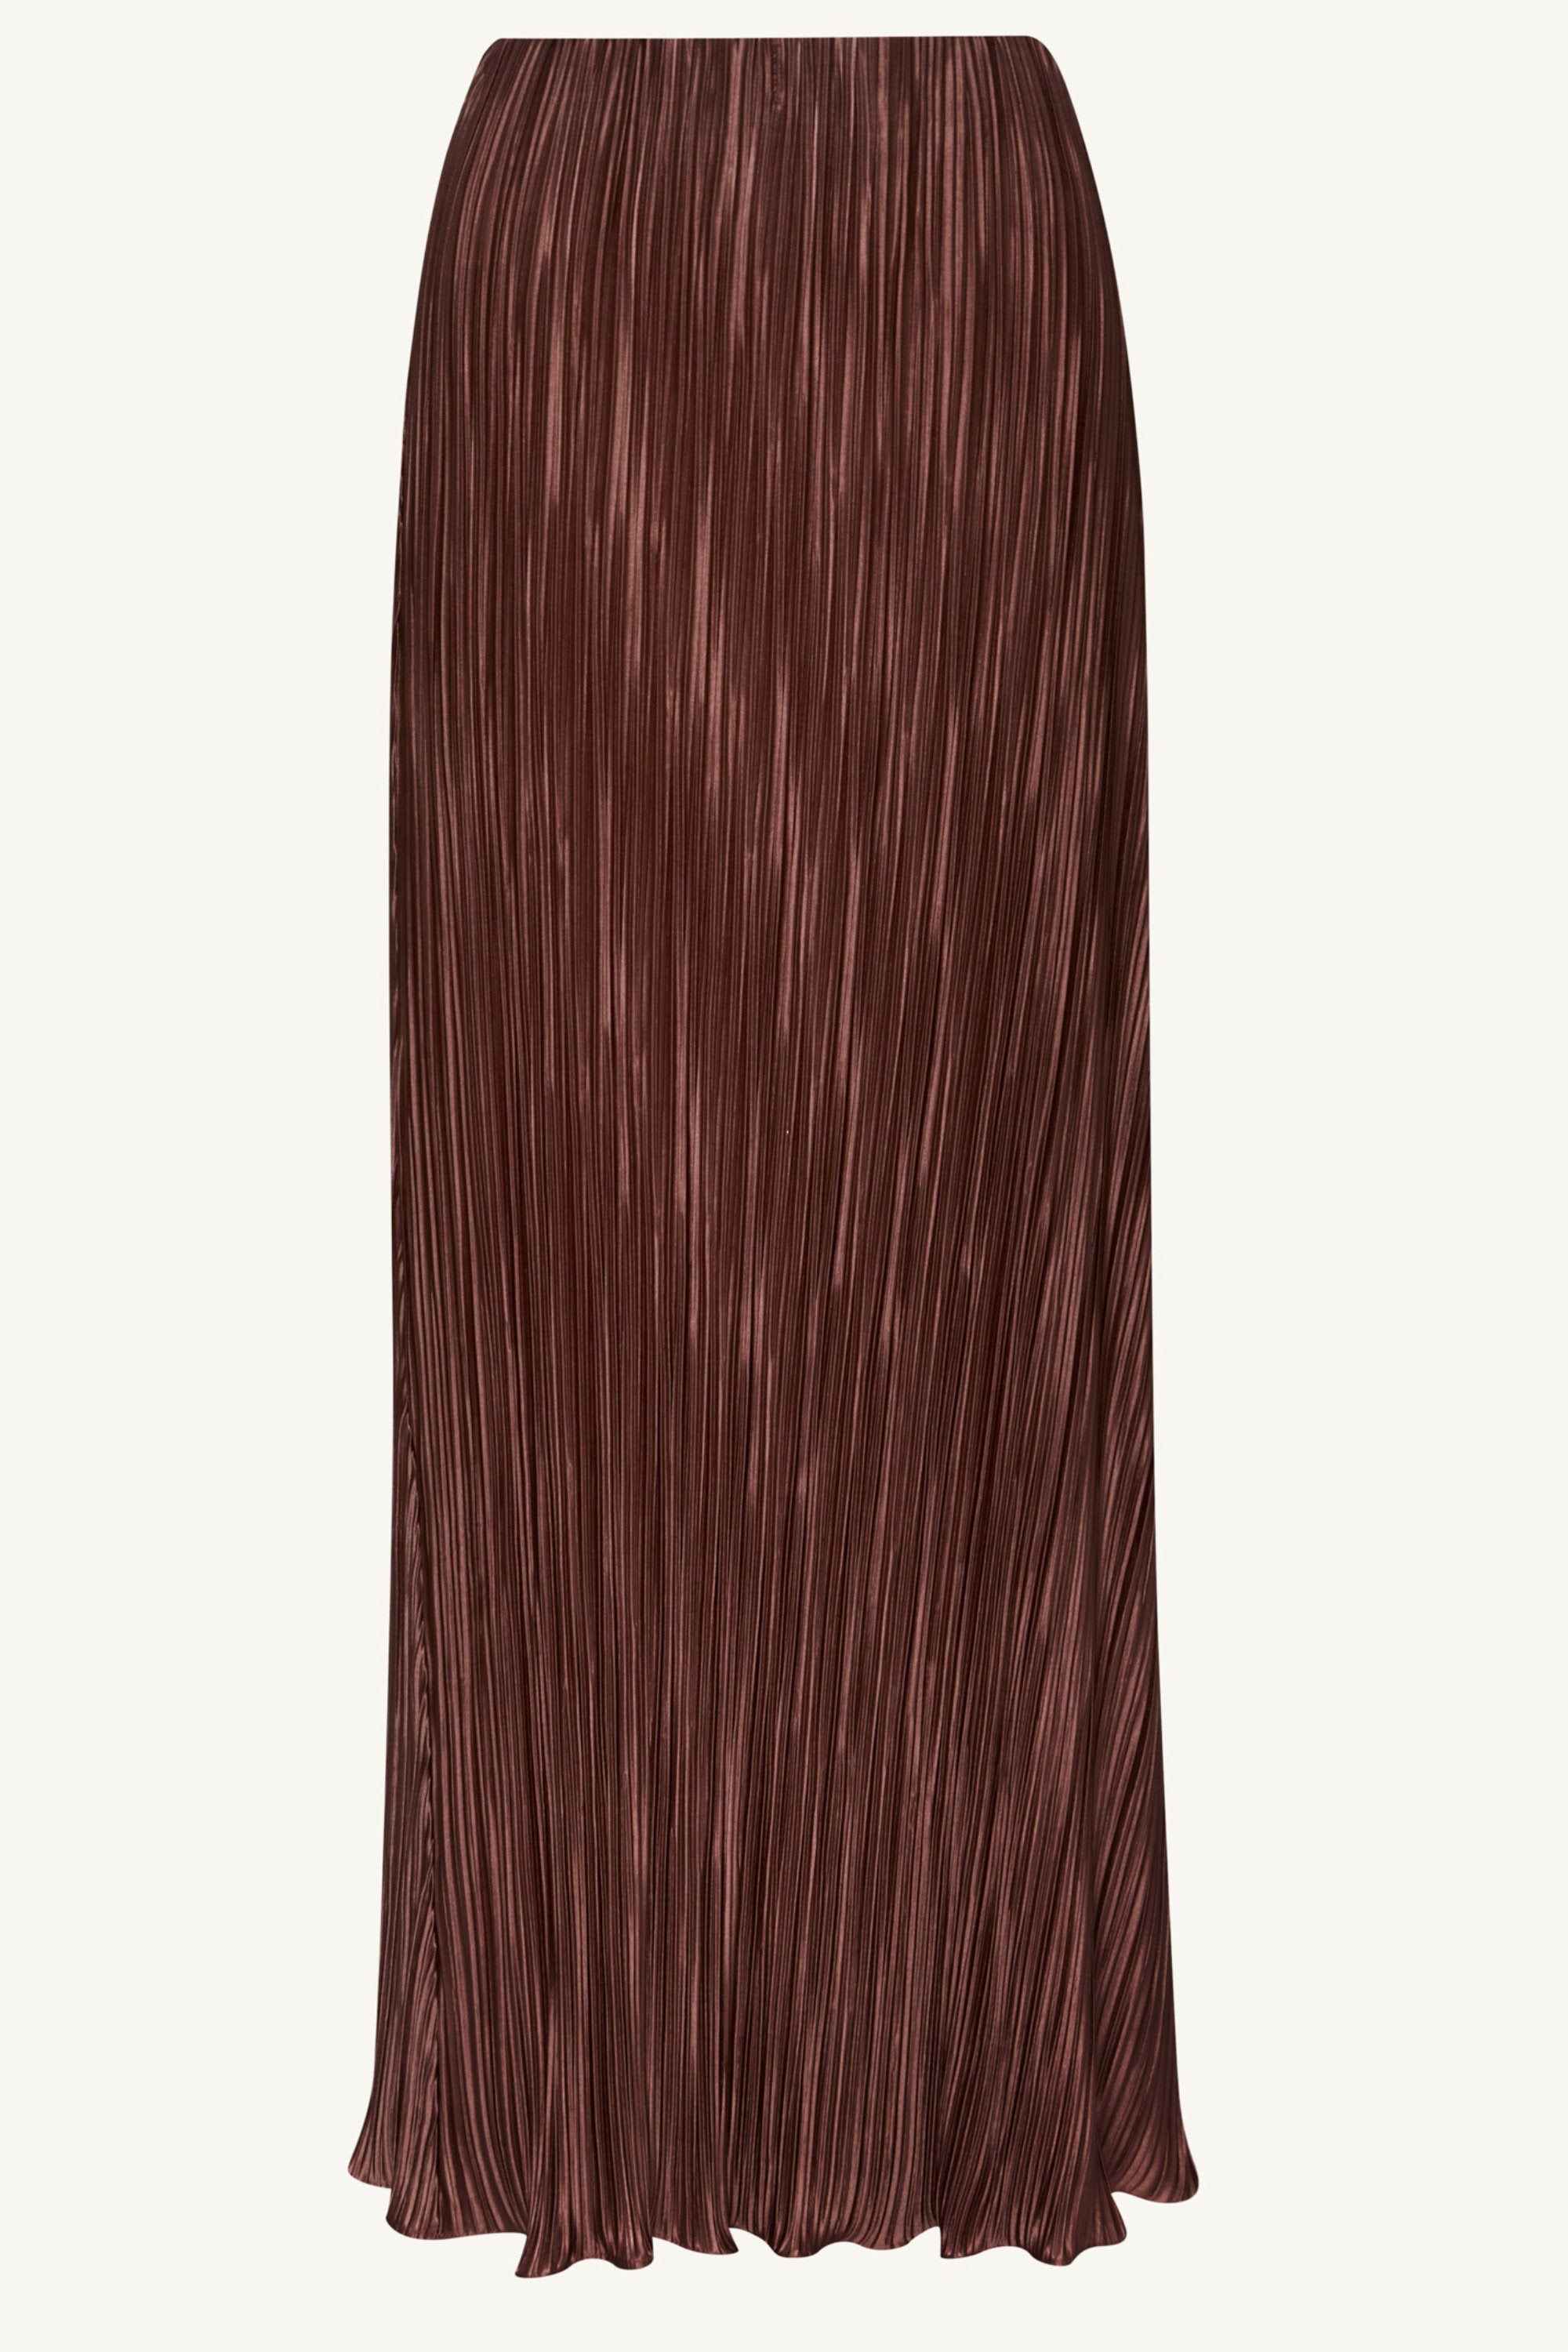 Satin Plisse Side Rouched Maxi Skirt - Chocolate Clothing Veiled 